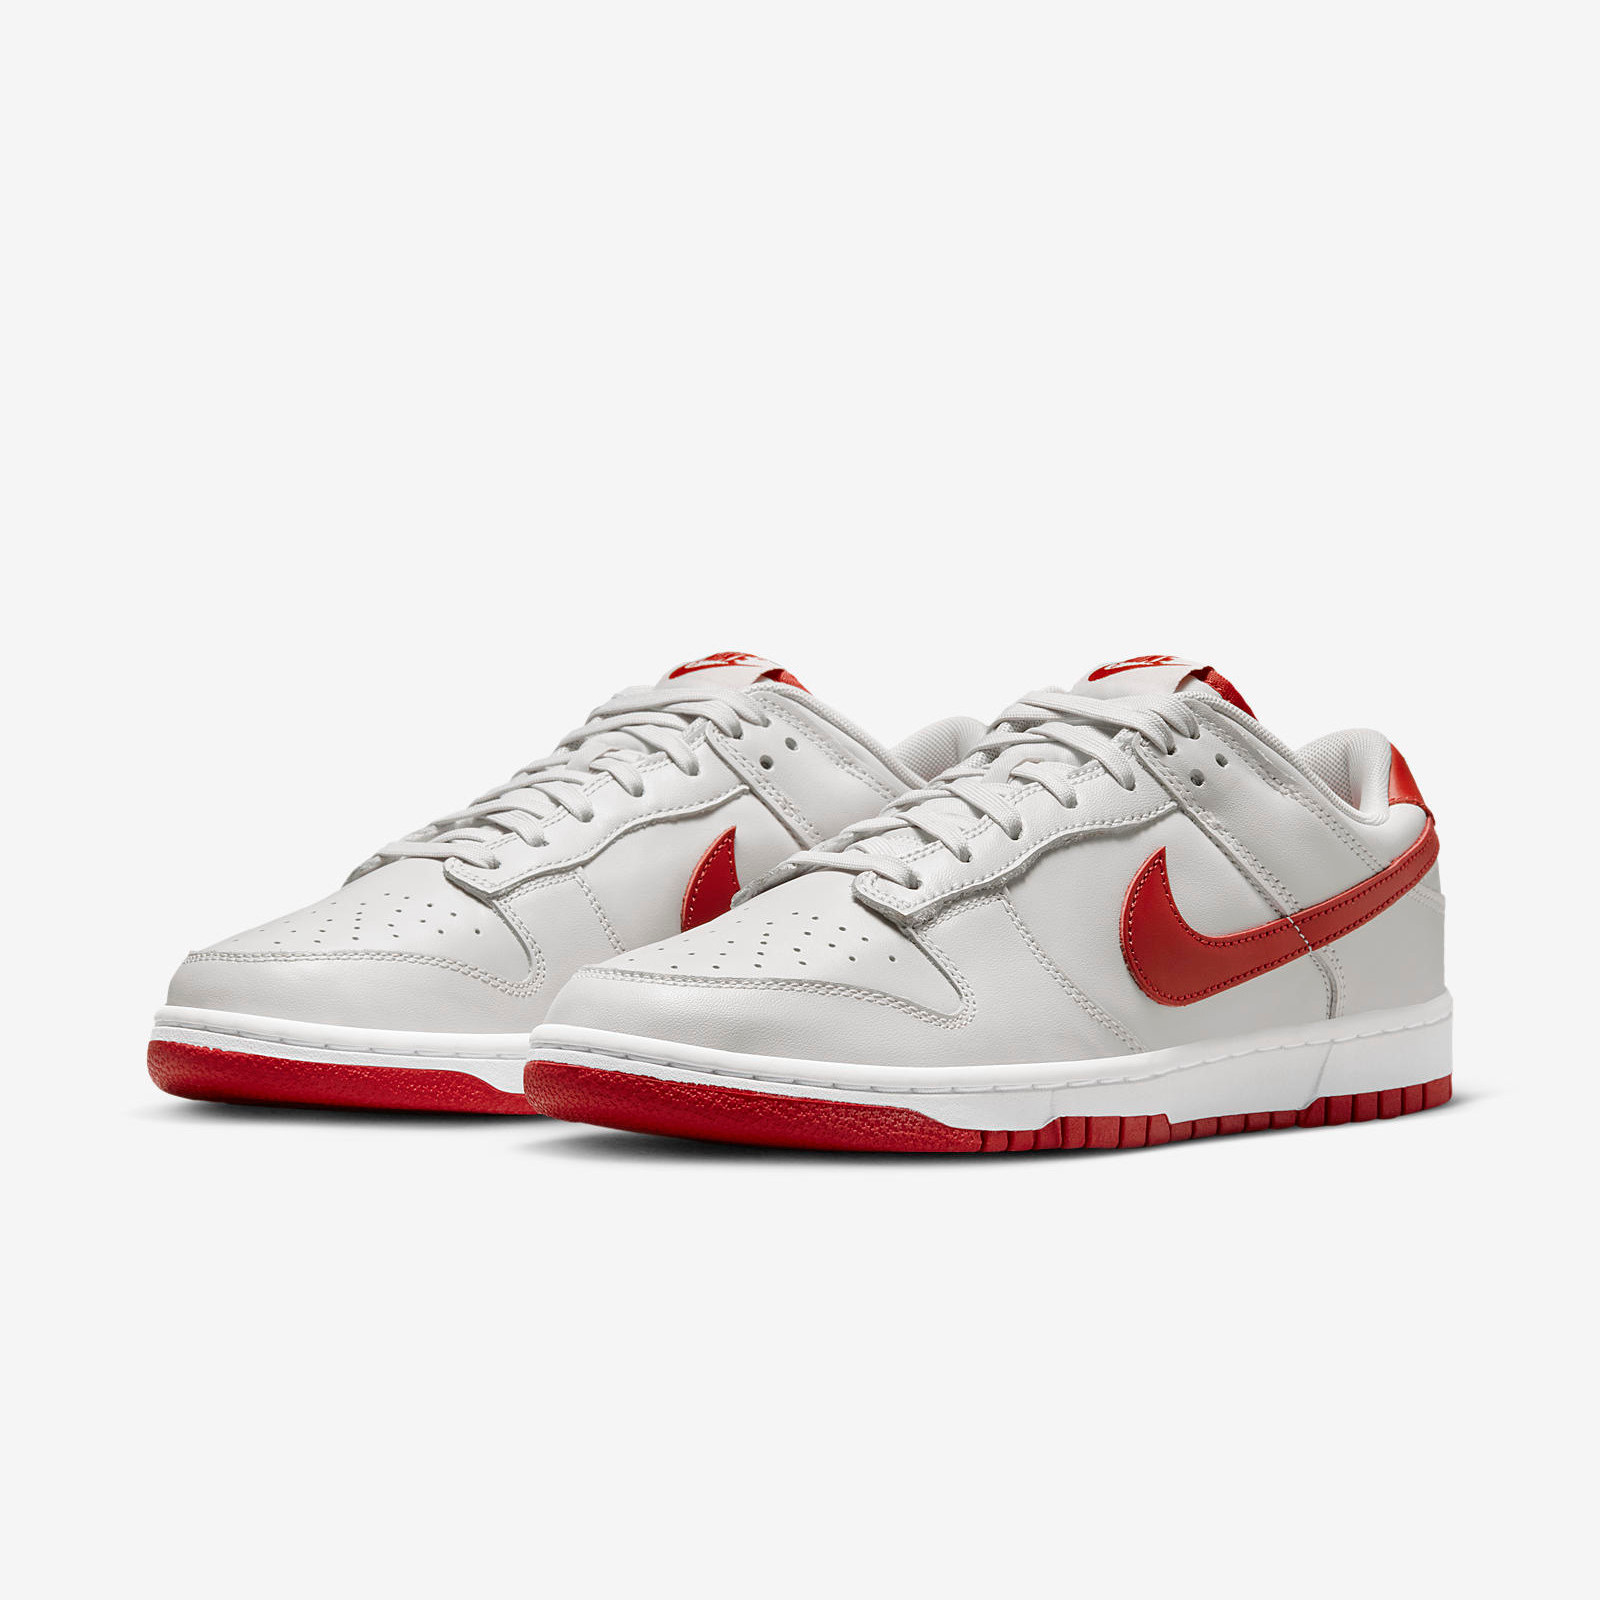 Nike Dunk Low
Grey / Red